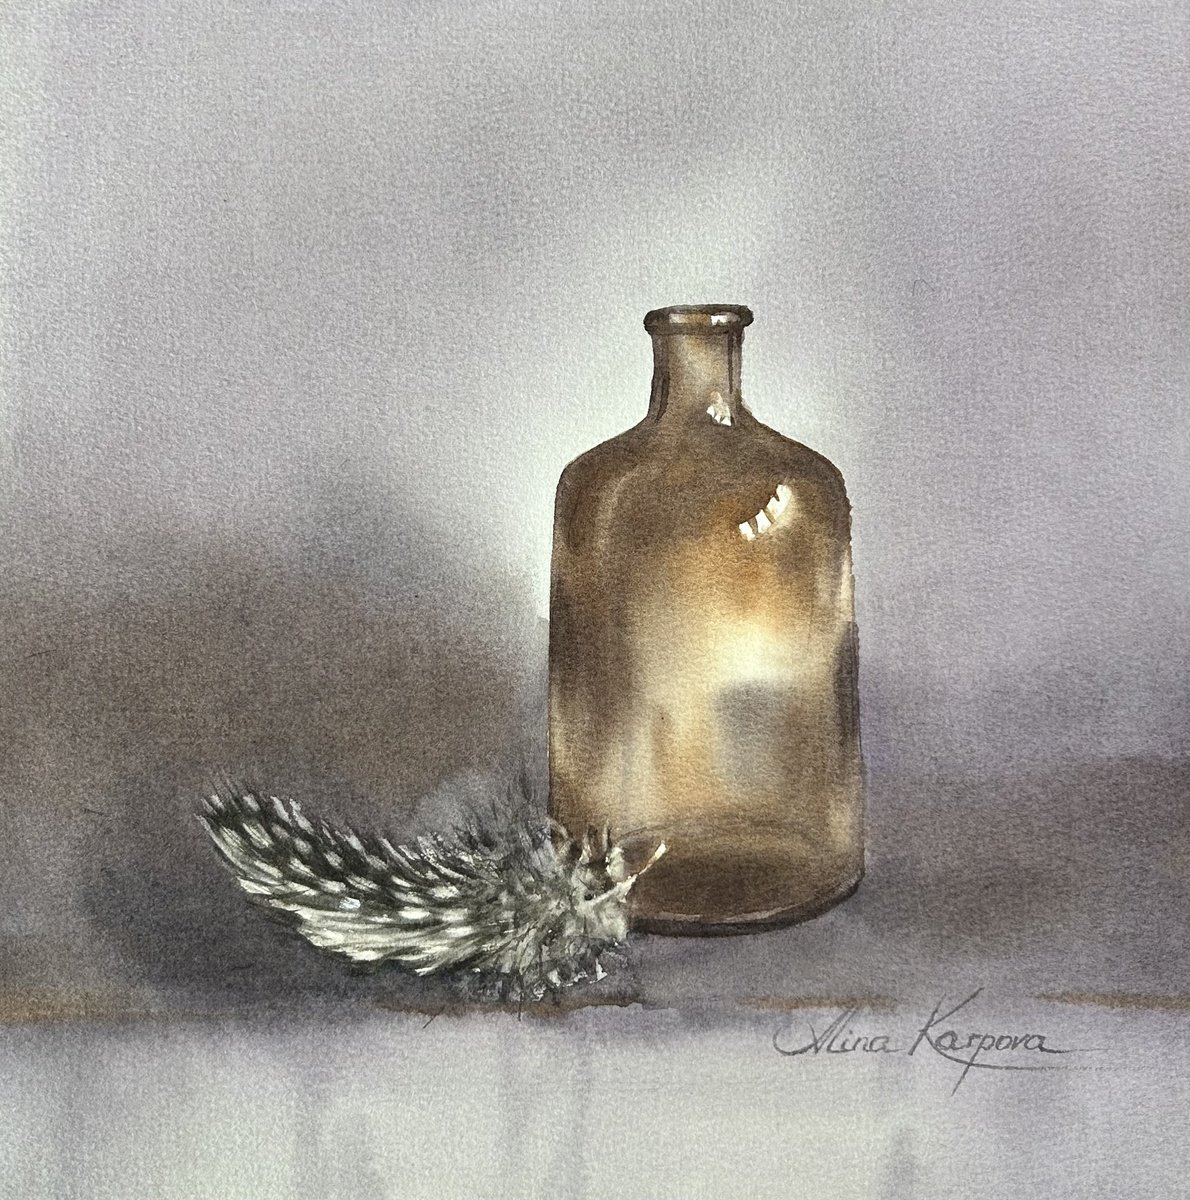 Glass and feather by Alina Karpova